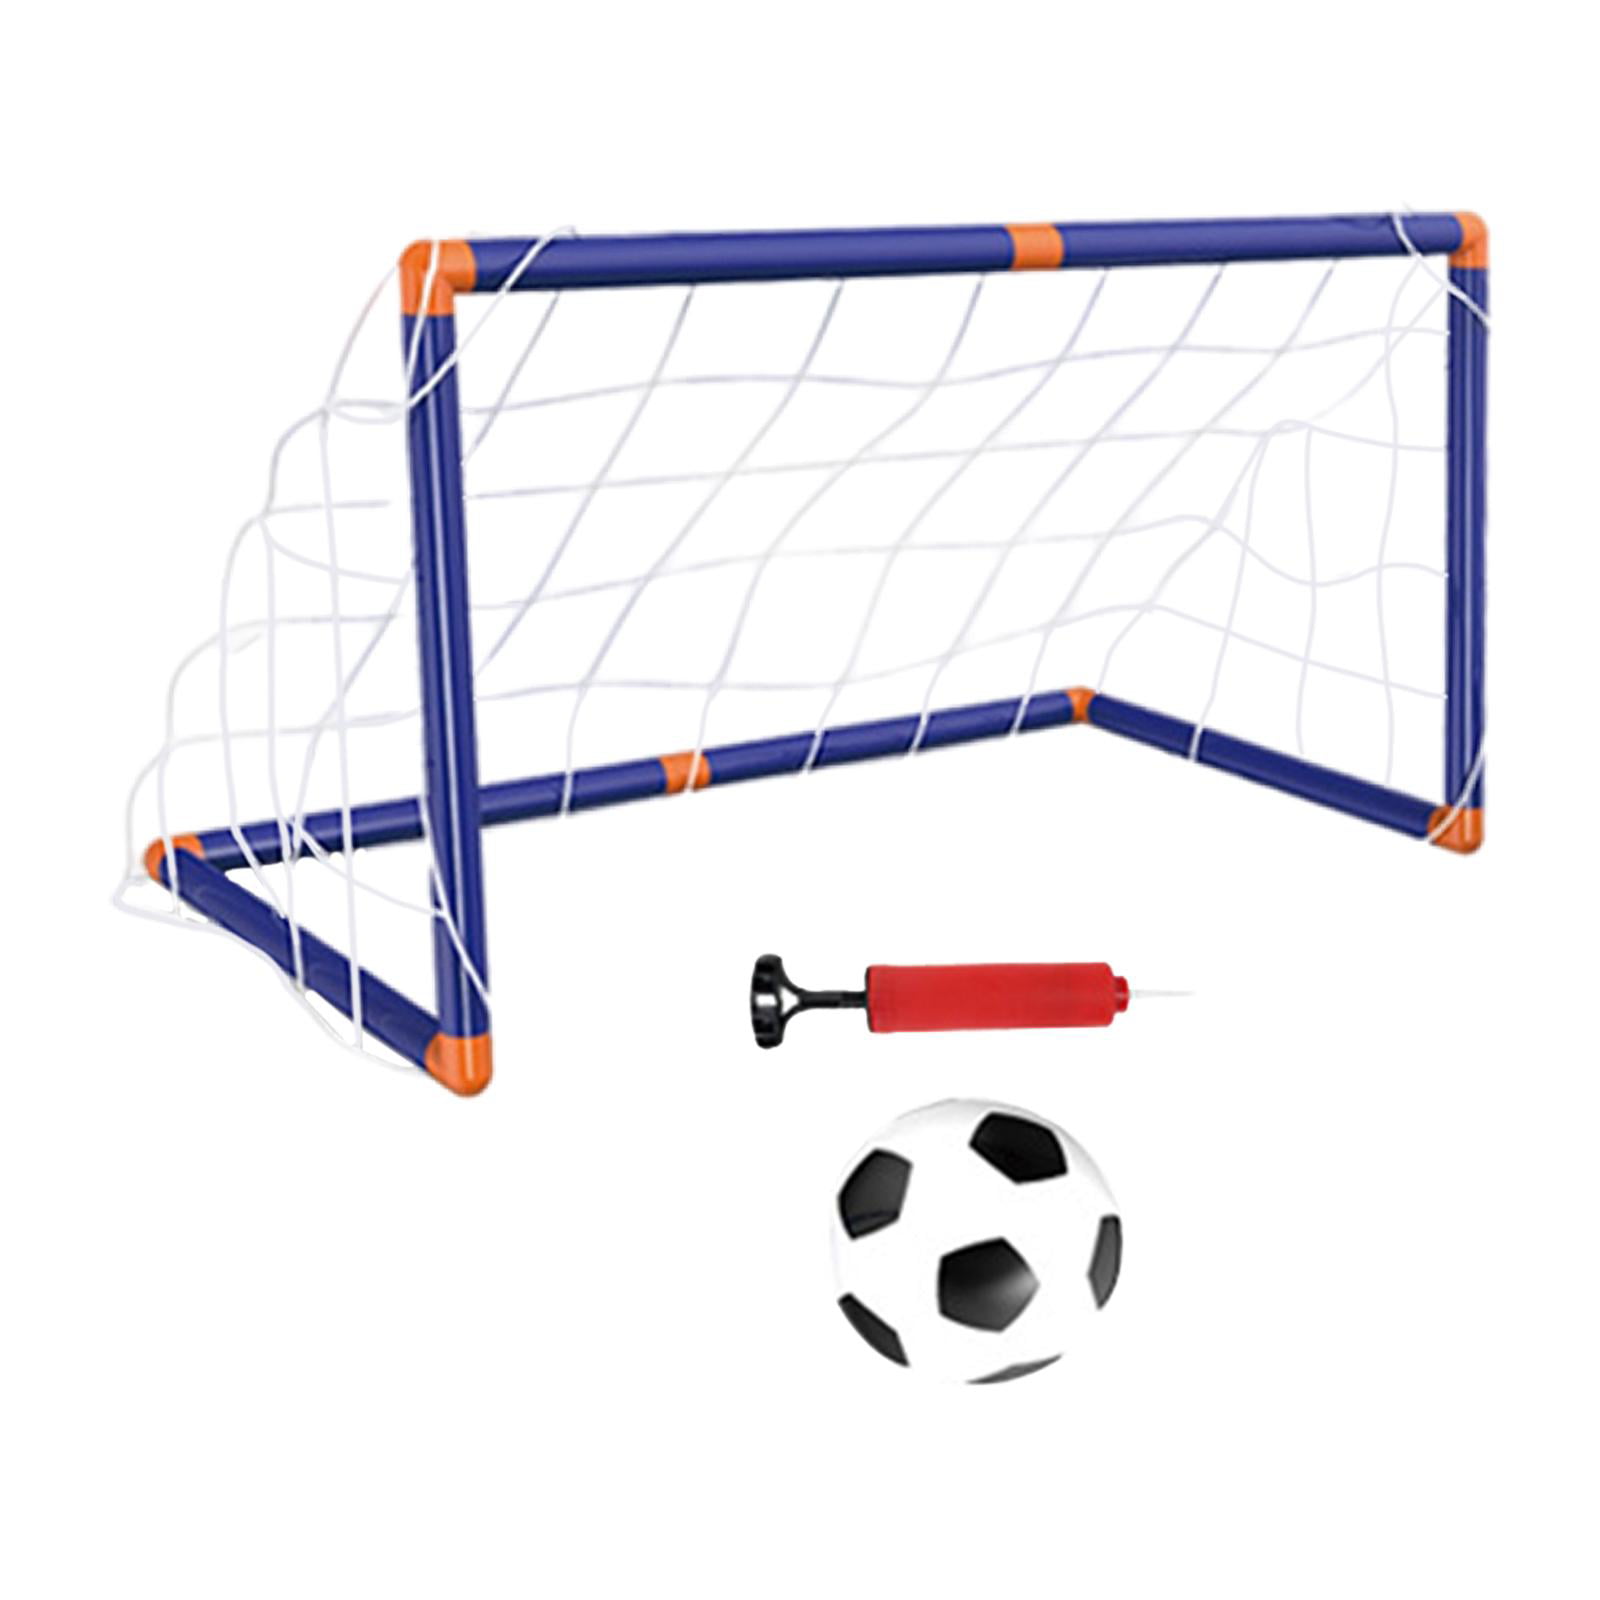 2pcs Folding Mini Football Soccer Goal Post Net Set with Pump Kids Sport Toy 